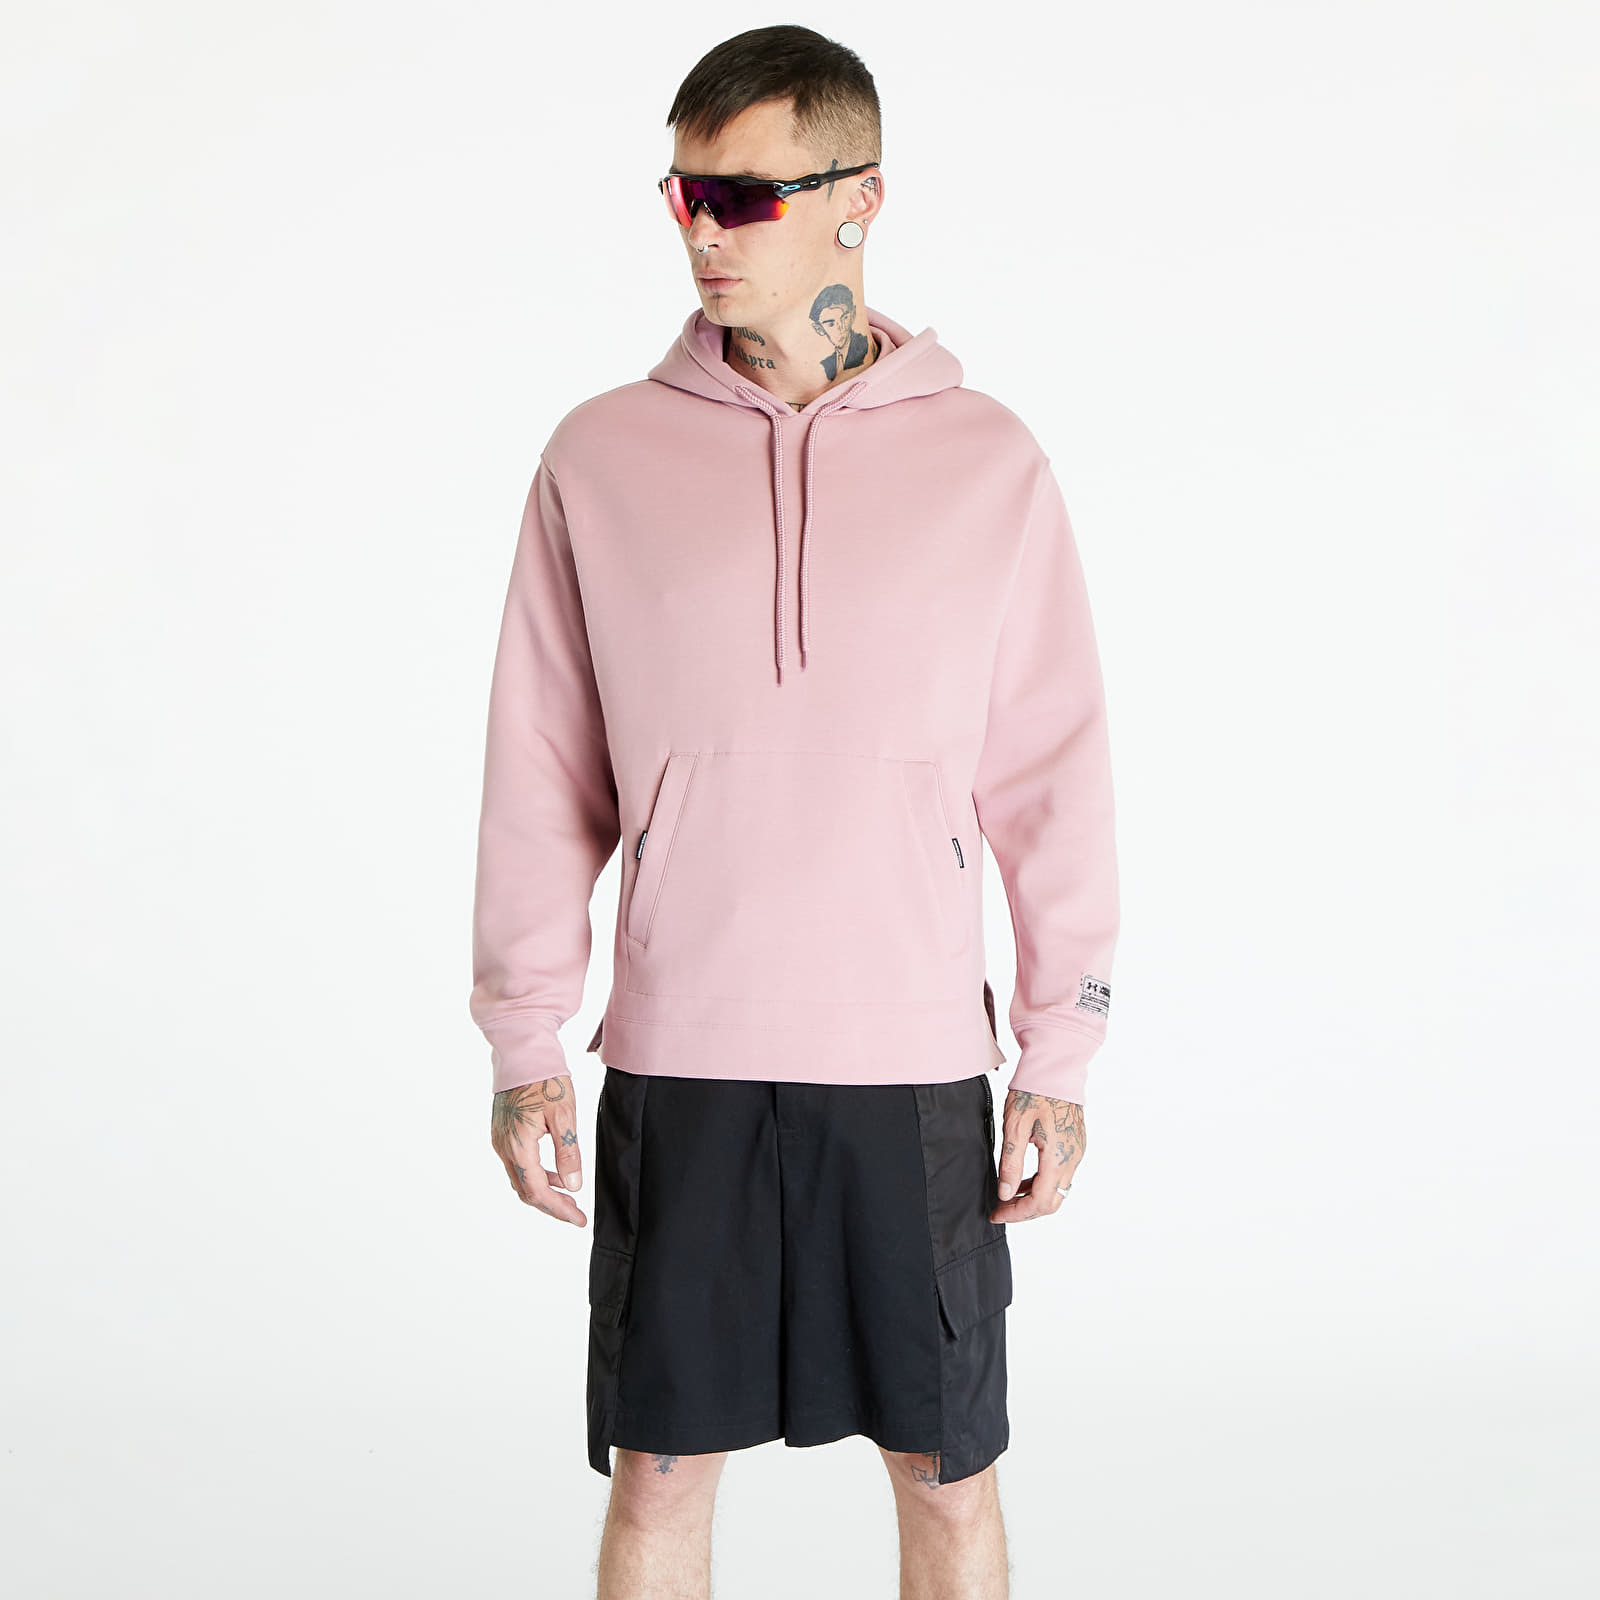 Under Armour - summit knit hoodie pink elixir/ black